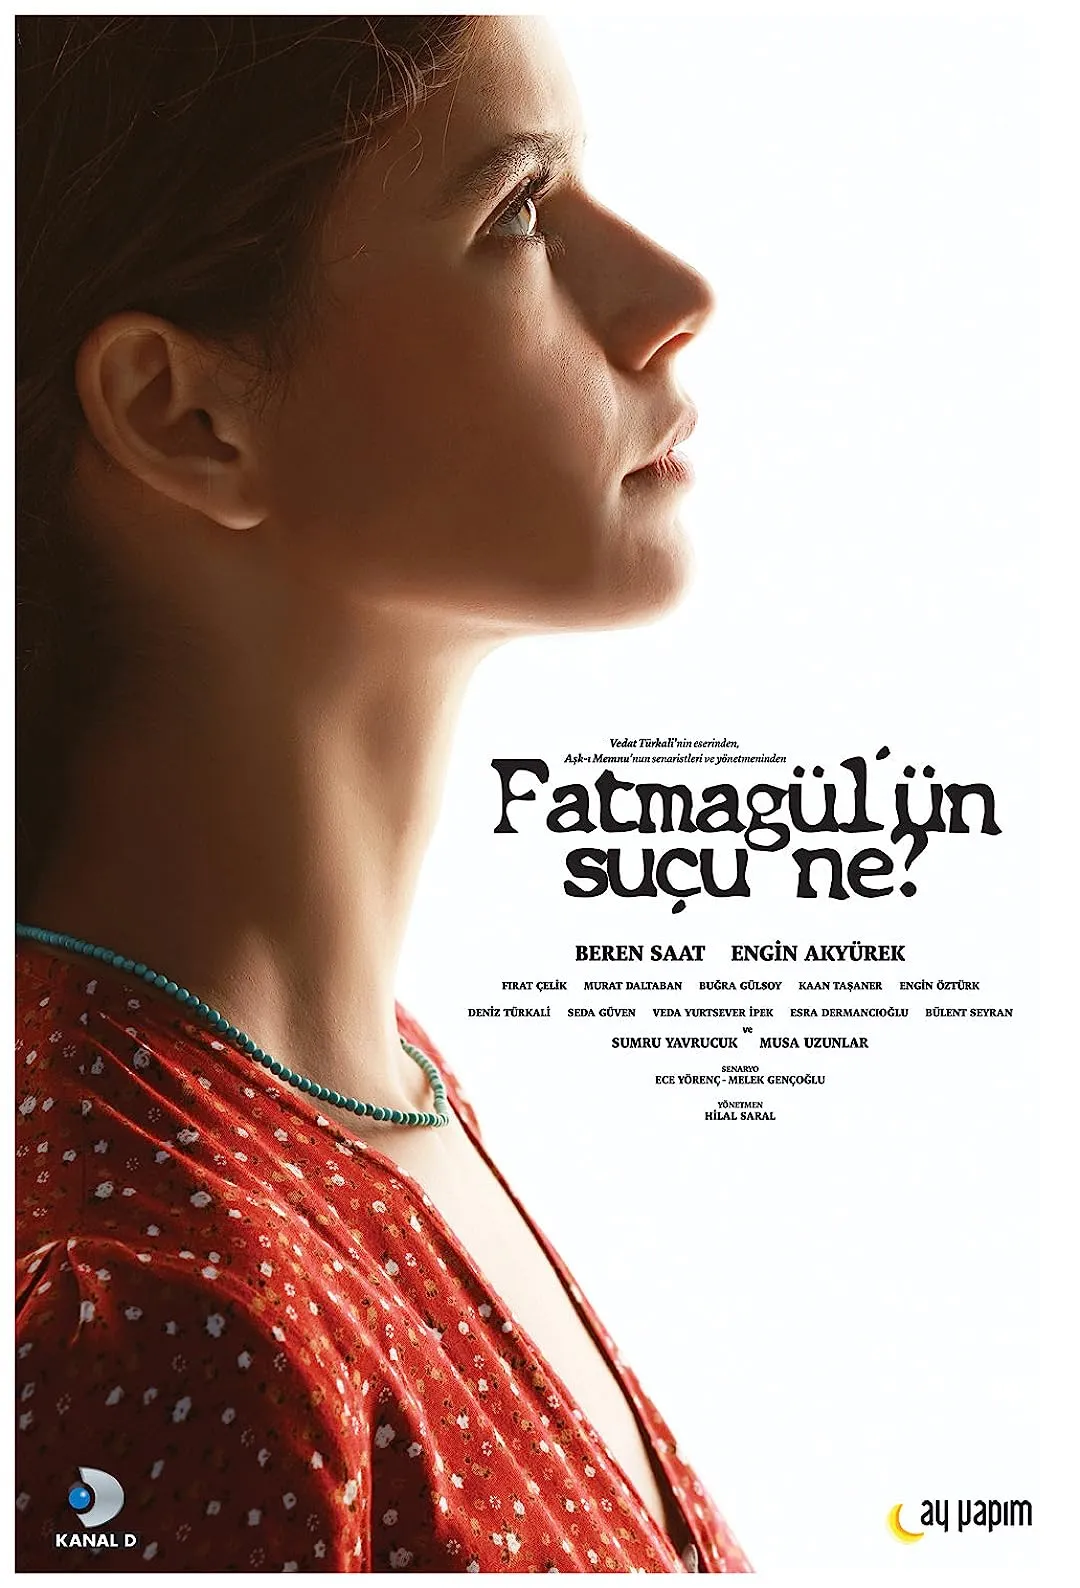 Fatmagul online subtitrat in romana